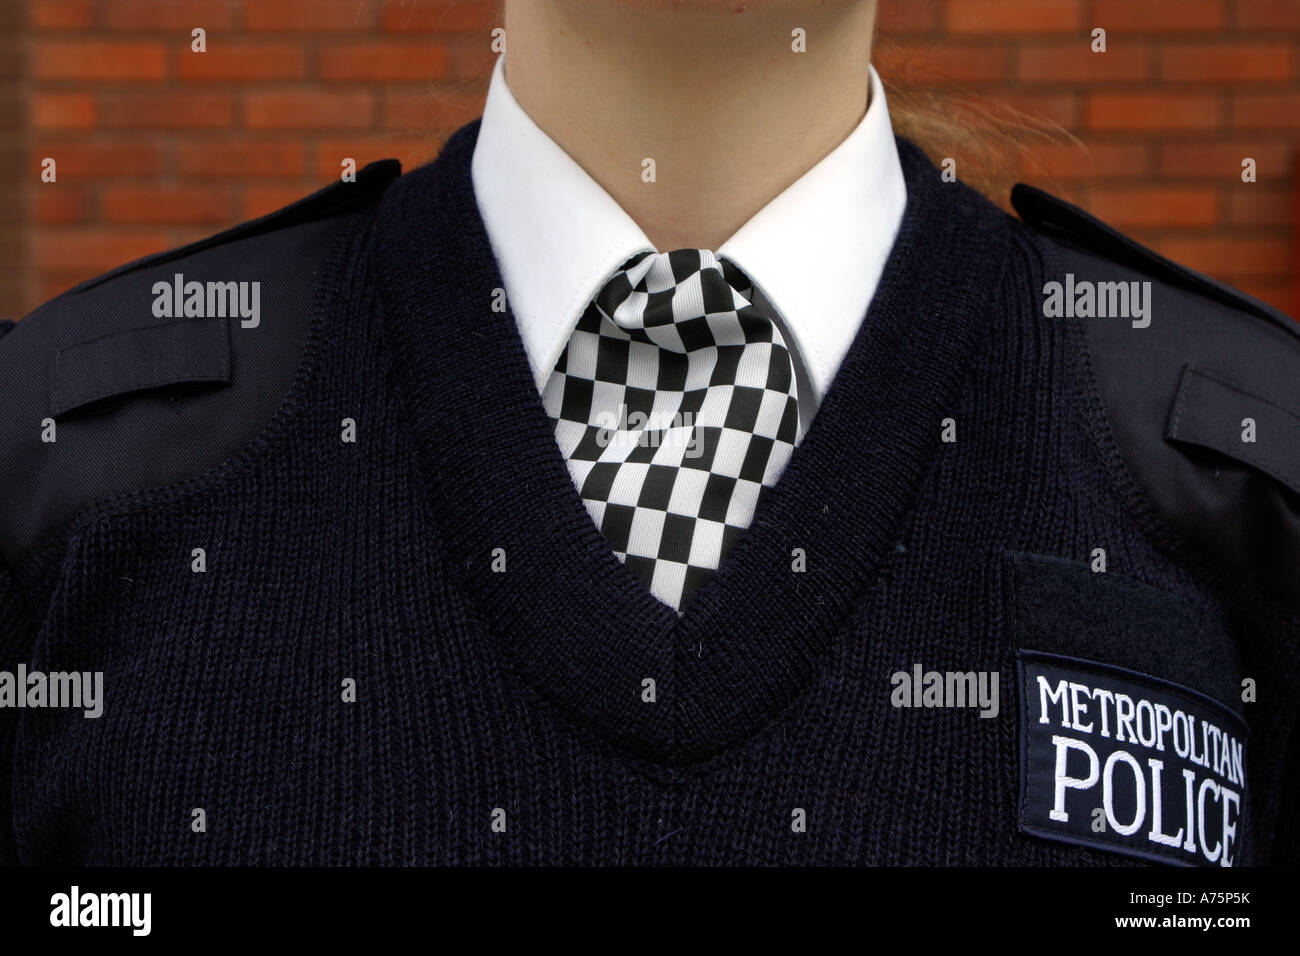 Metropolitam Police Uniform, London. Stock Photo